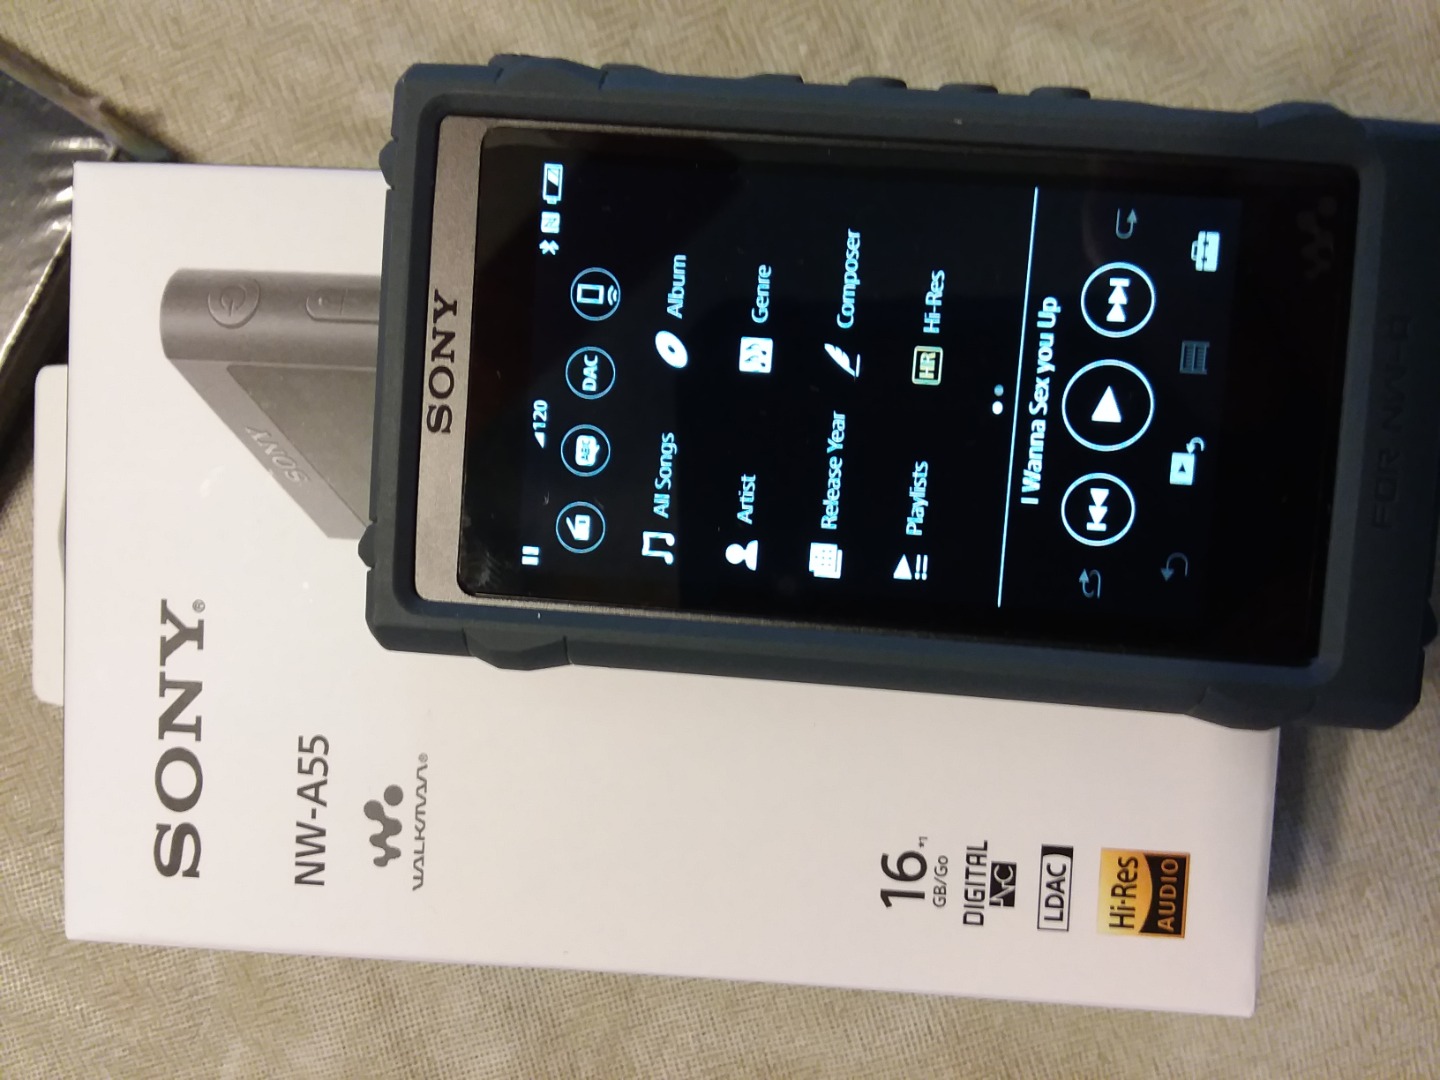 Customer Reviews: Sony NW-A55 Walkman® (Black) High-resolution portable